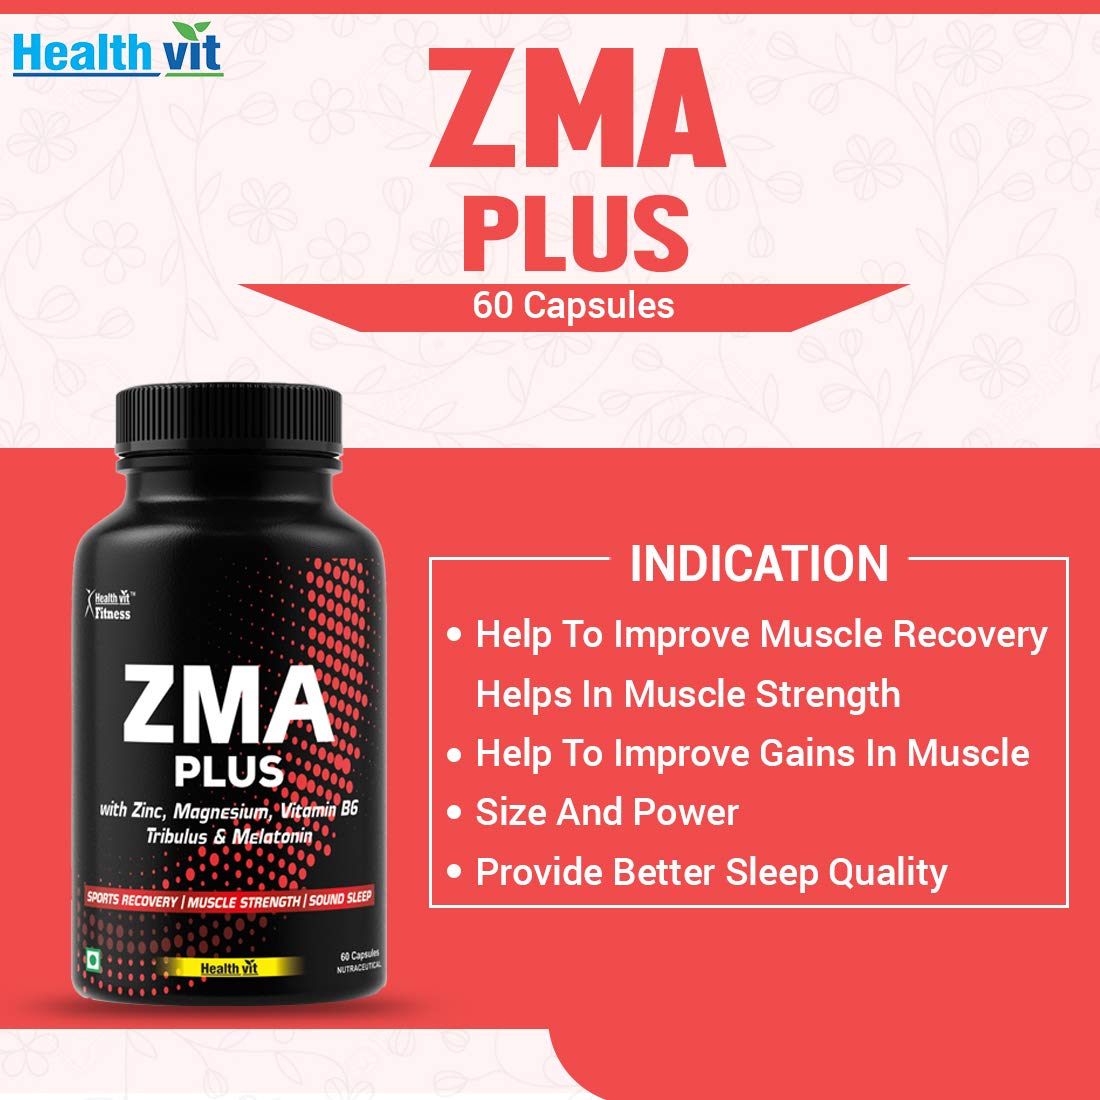 Healthvit Fitness Triple Strength ZMA Plus, Sports Recovery & Sleep Support Supplement with Zinc, Magnesium, Vitamin B6, Tribulus & Melatonin – 60 Capsules